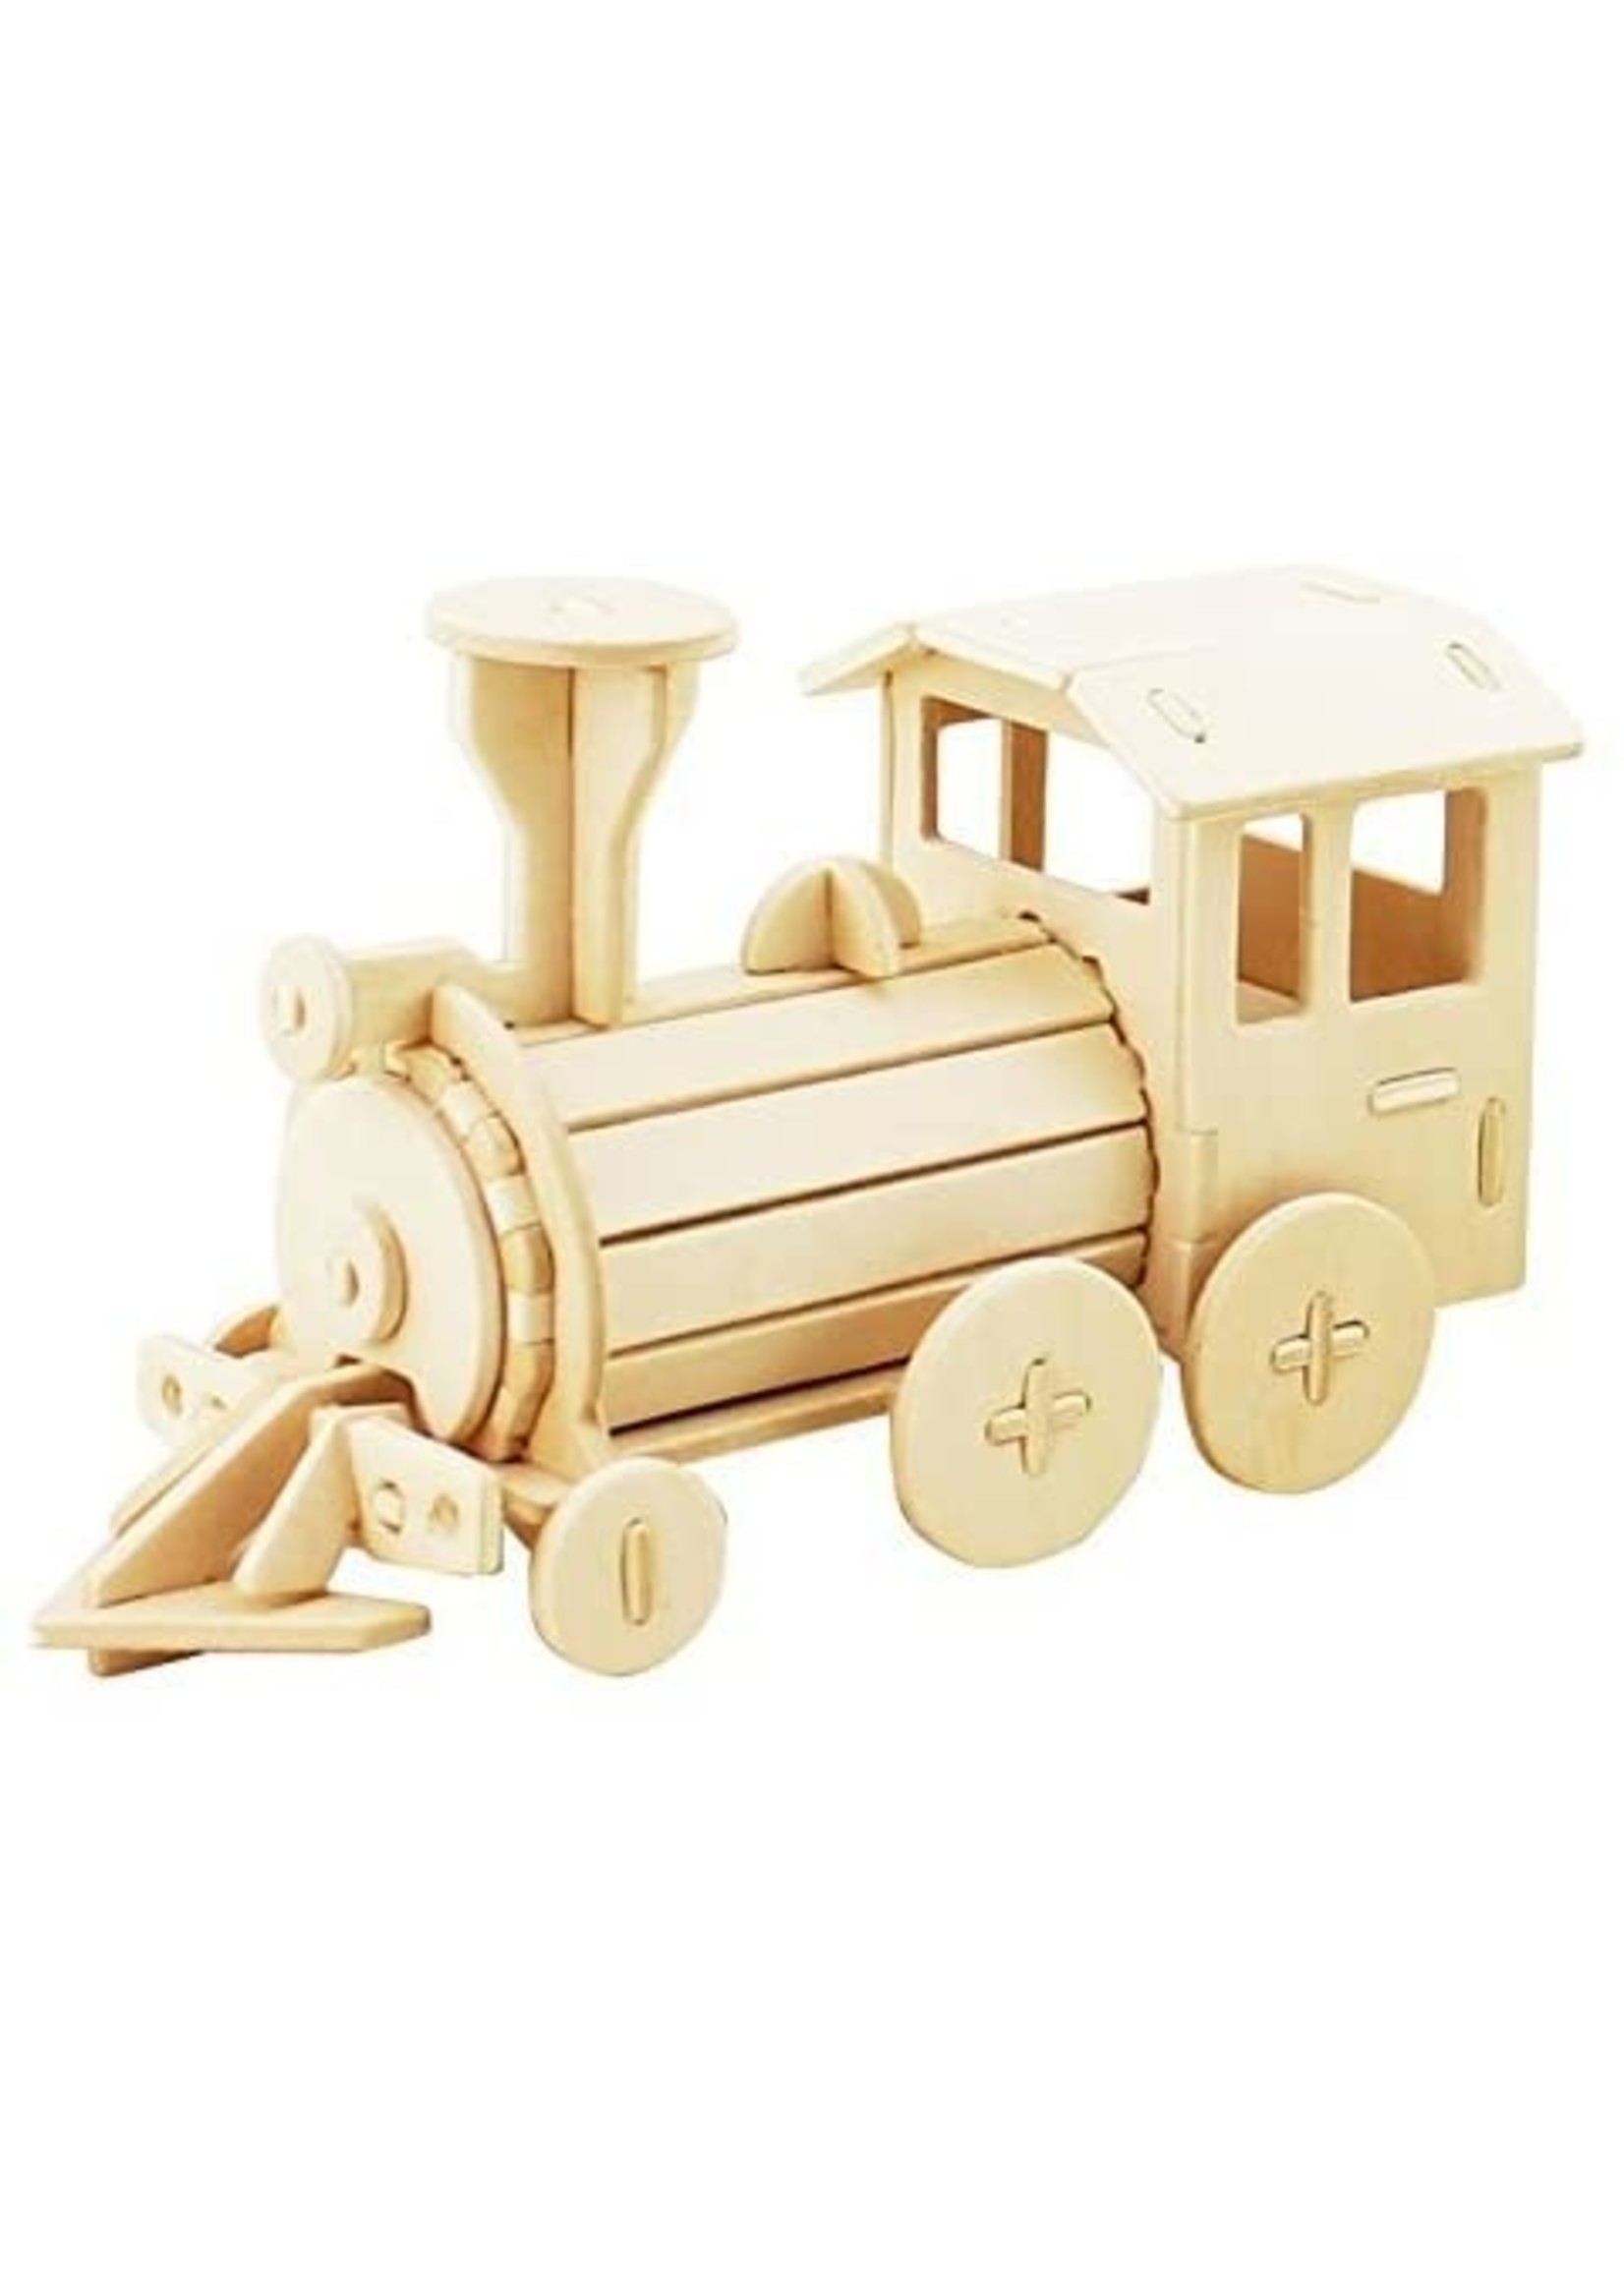 Hands Craft 3D Wooden Puzzle - Locomotive